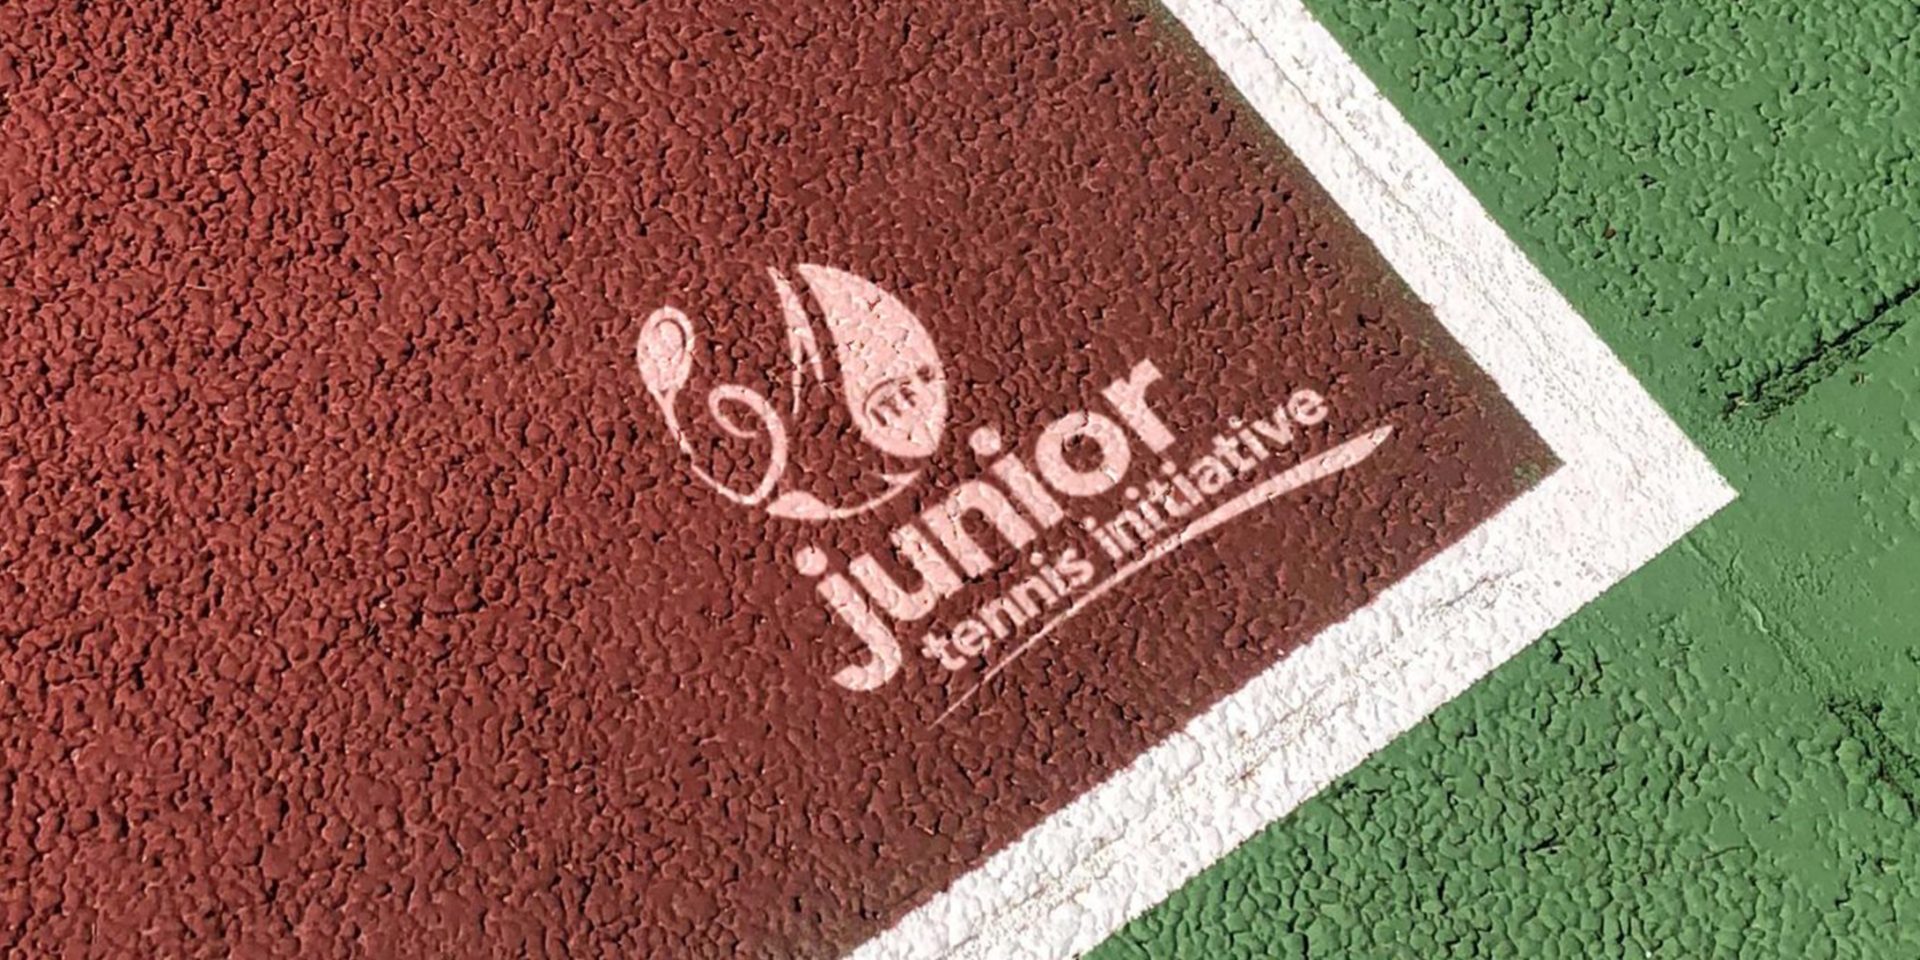 ITF – Junior Tennis Initiative